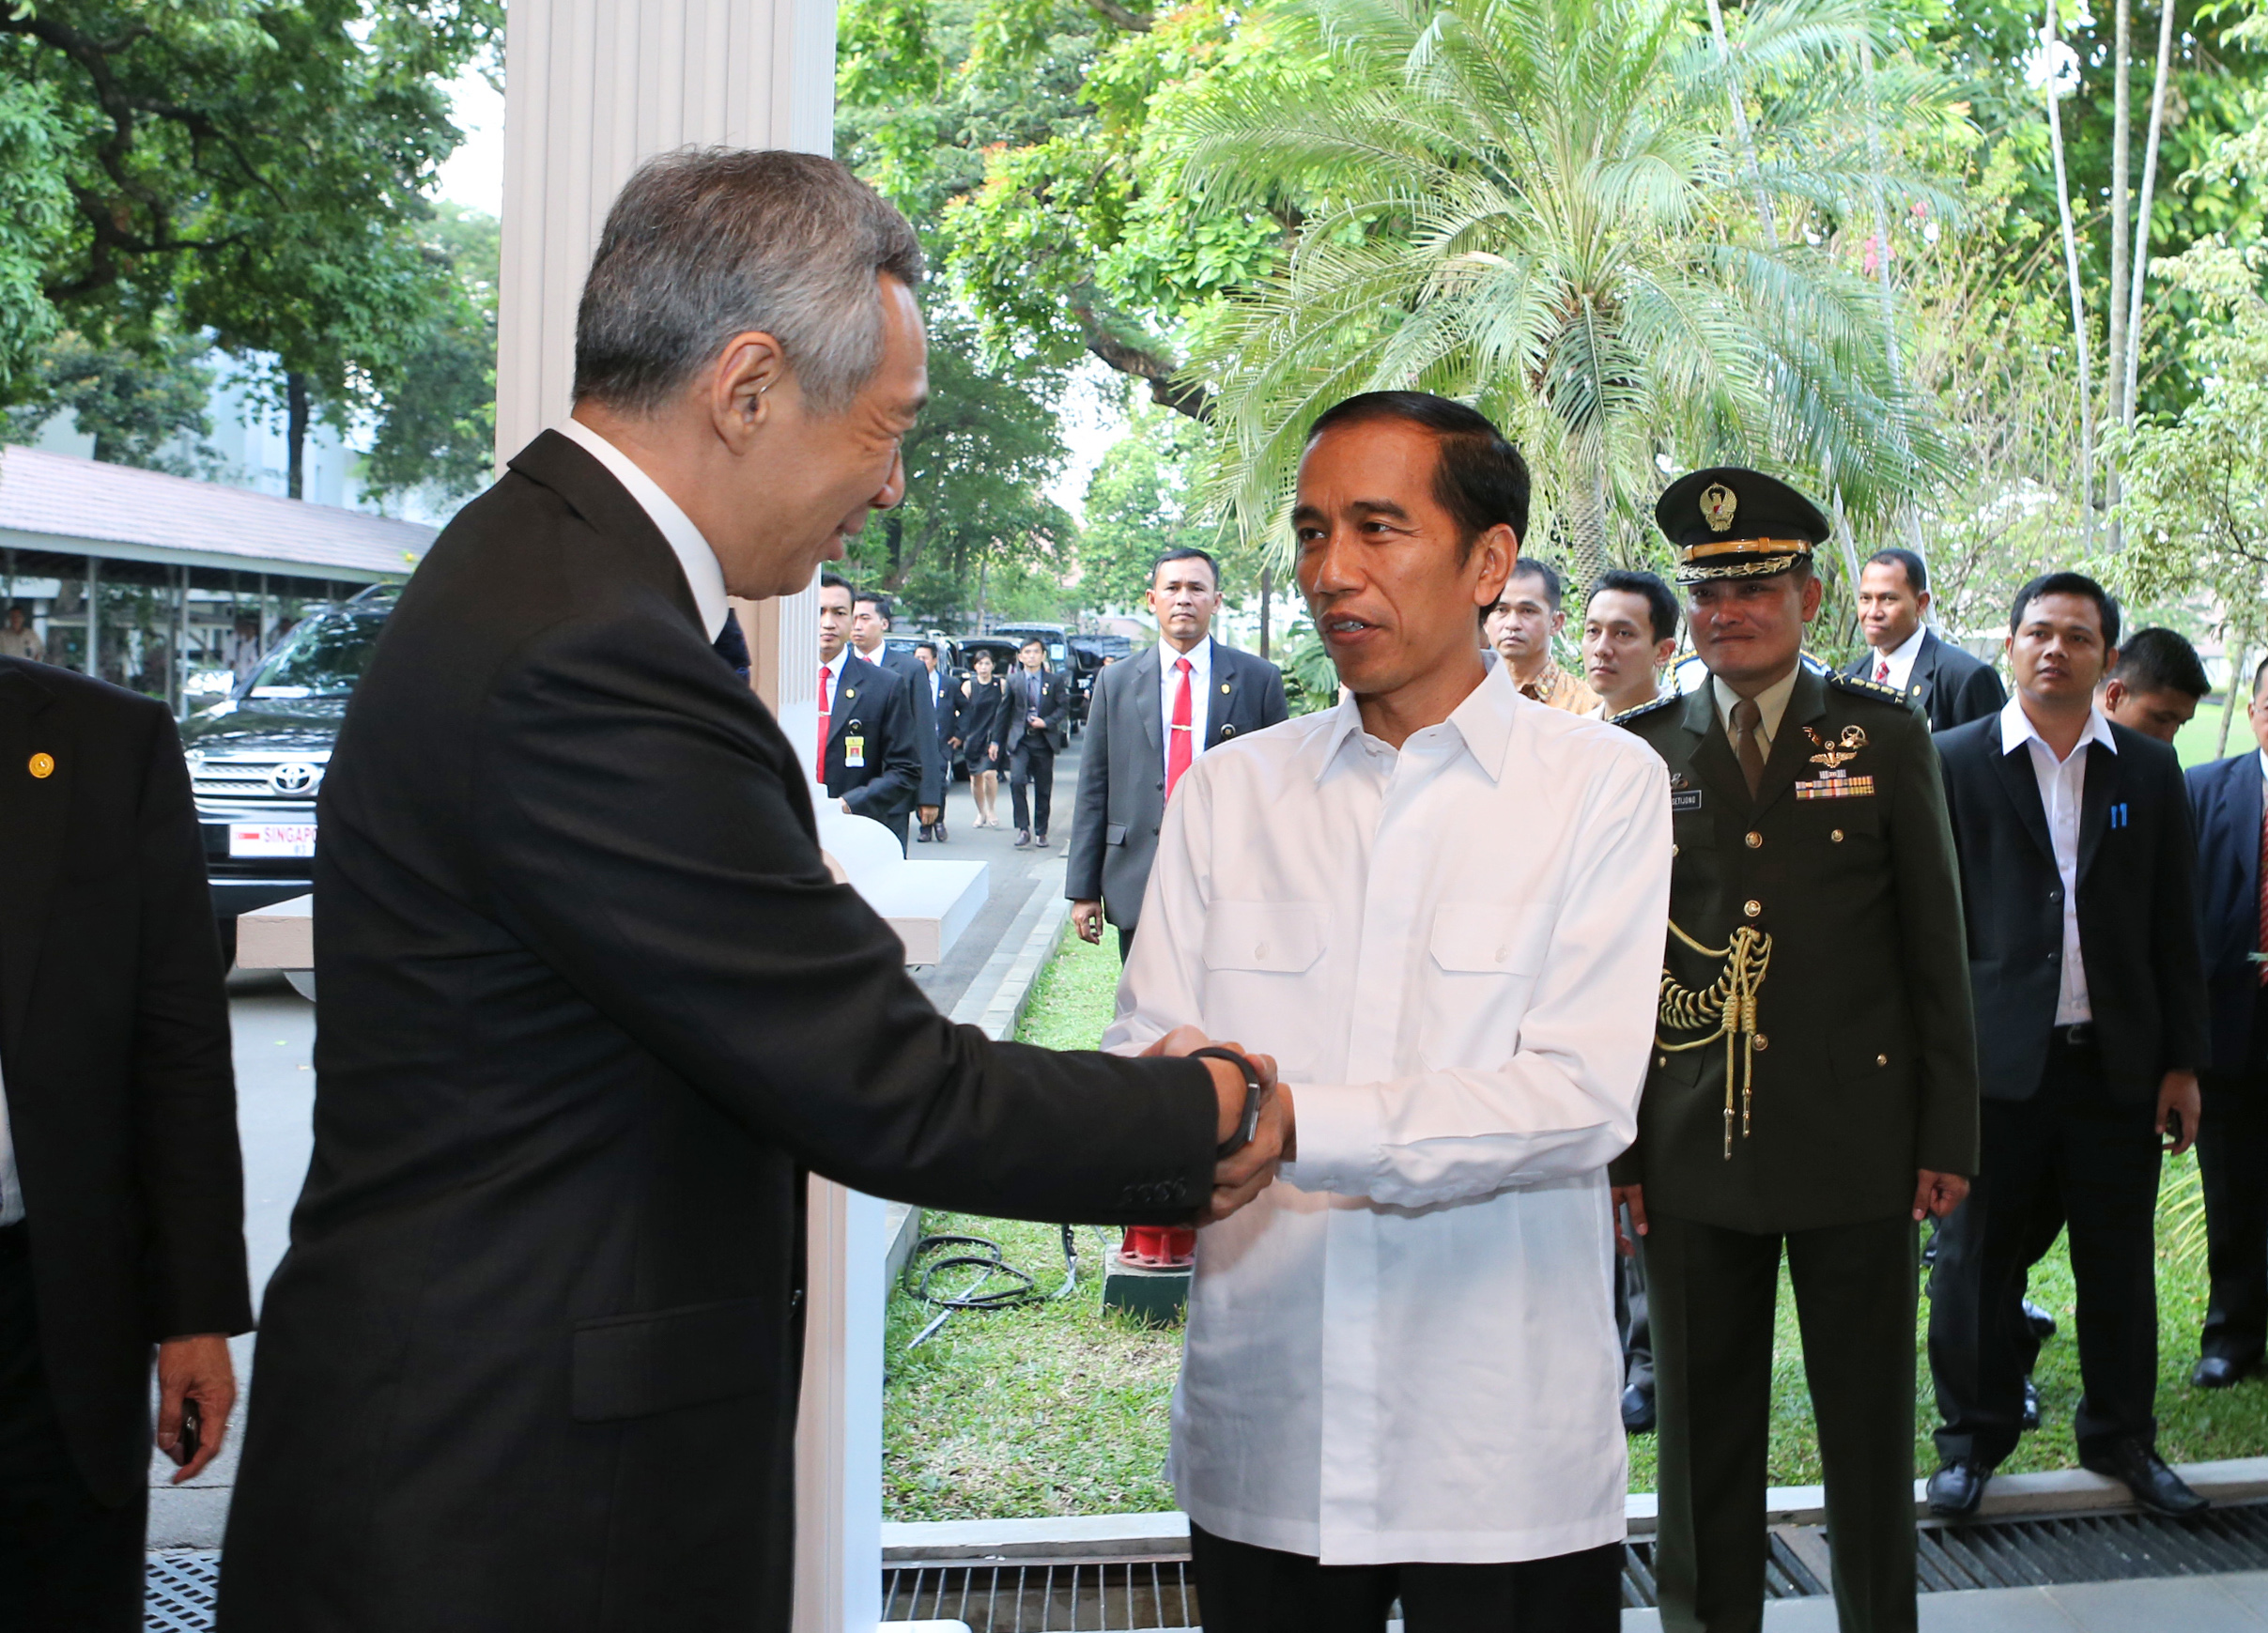 Inauguration of Joko Widodo as President of Indonesia - Oct 2014 (MCI Photo by LH Goh)